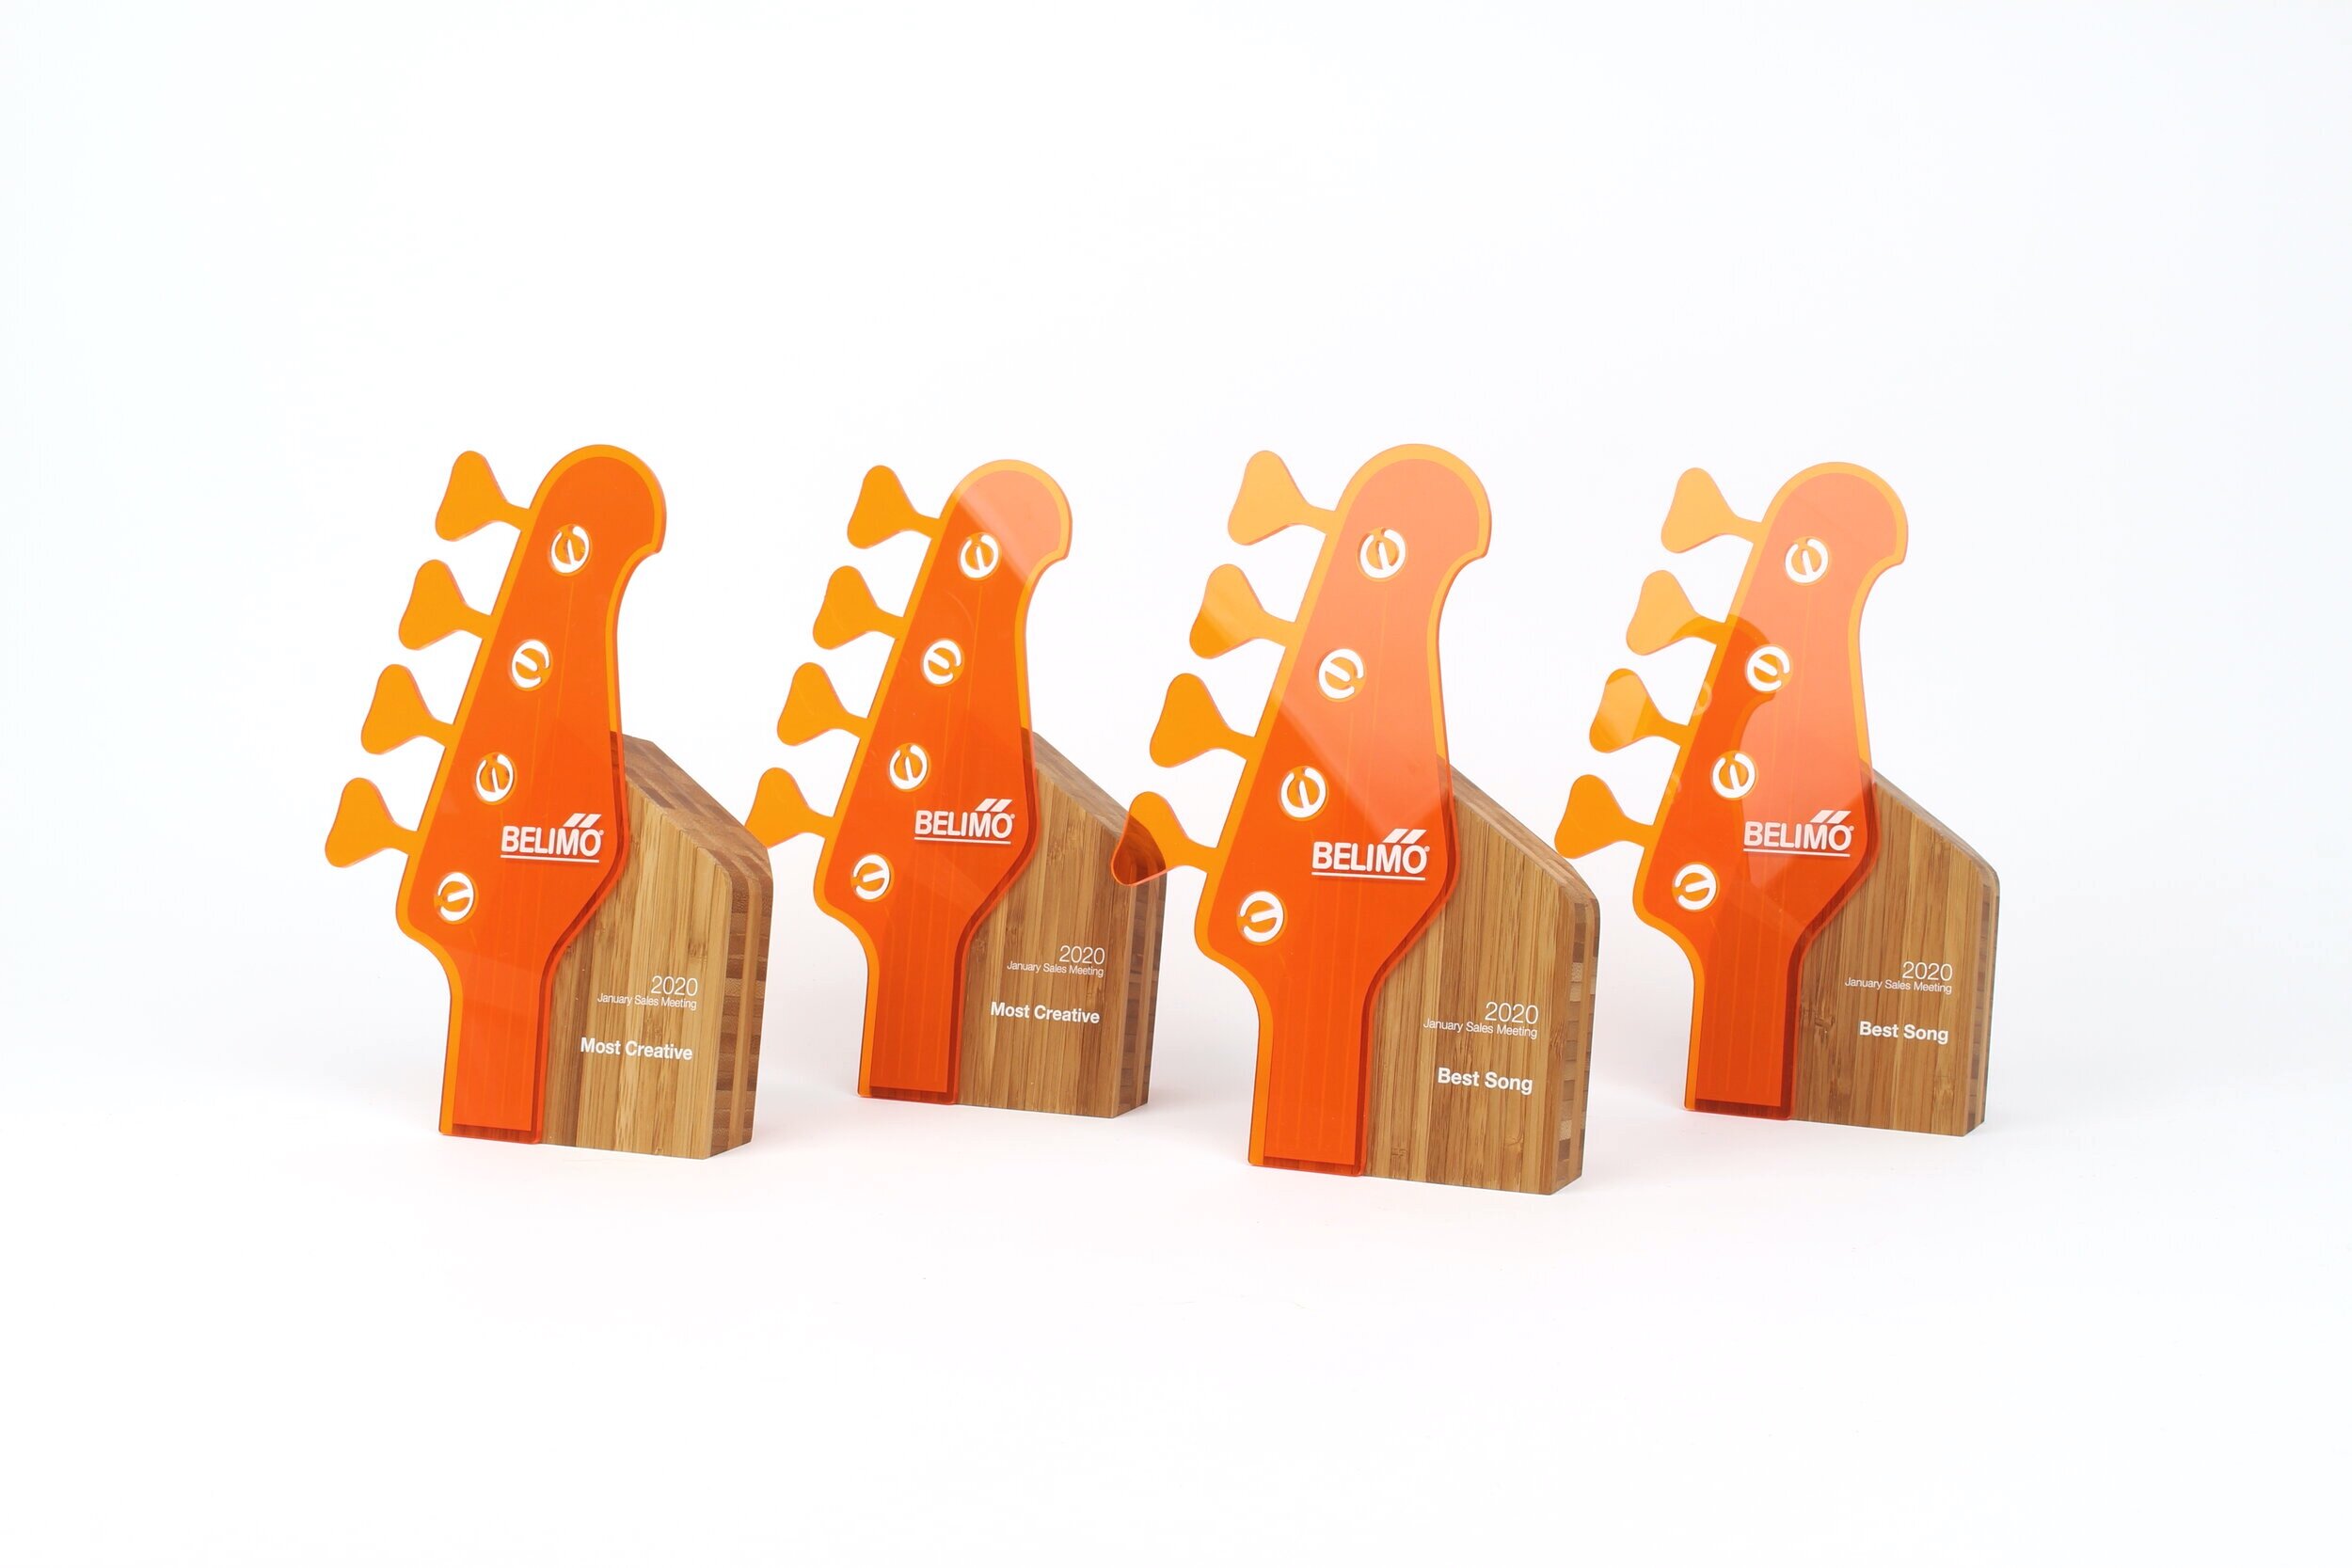 belimo custom sales meeting awards guitar shaped awards 